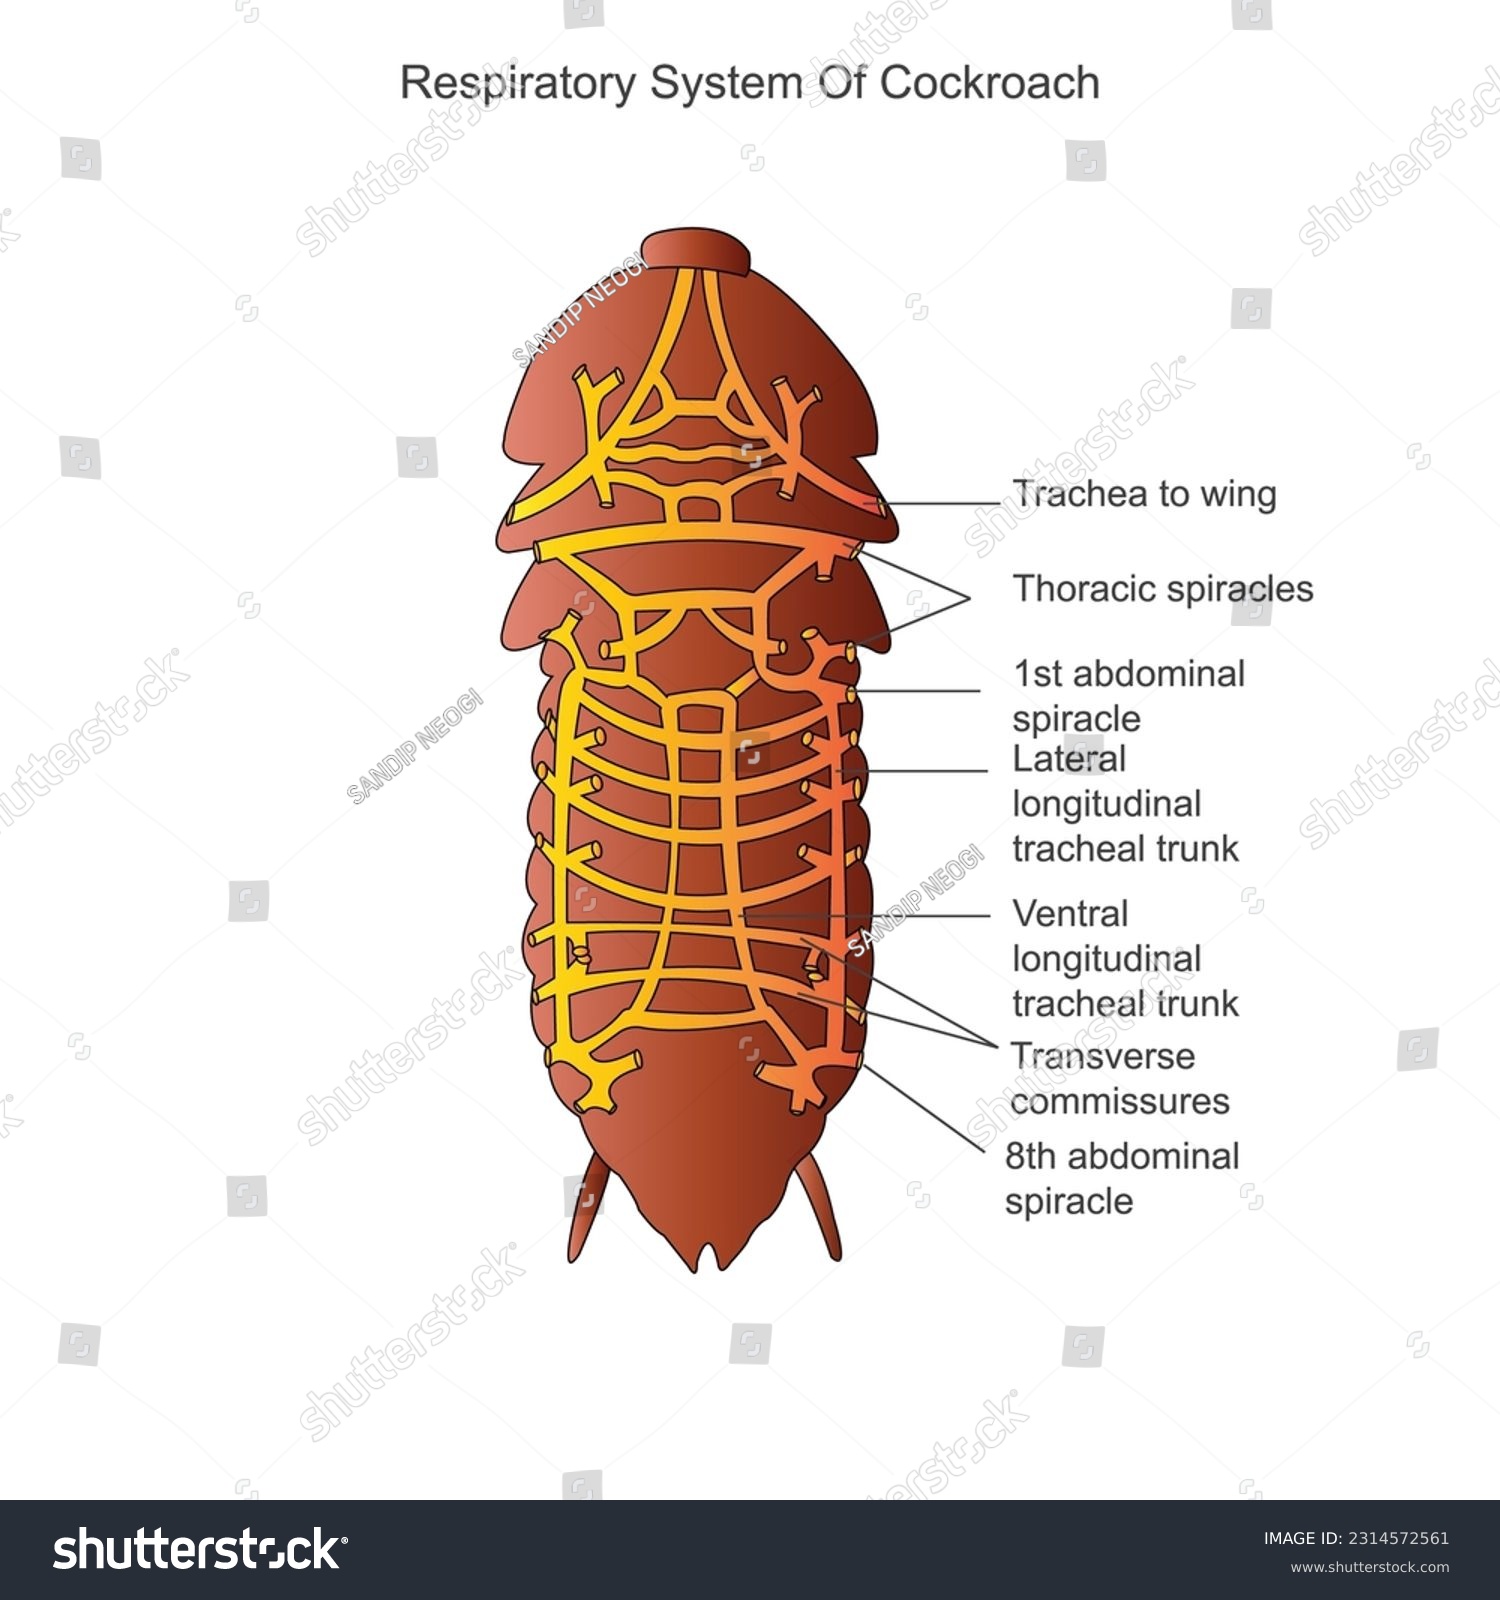 Hundred cockroach anatomy royalty